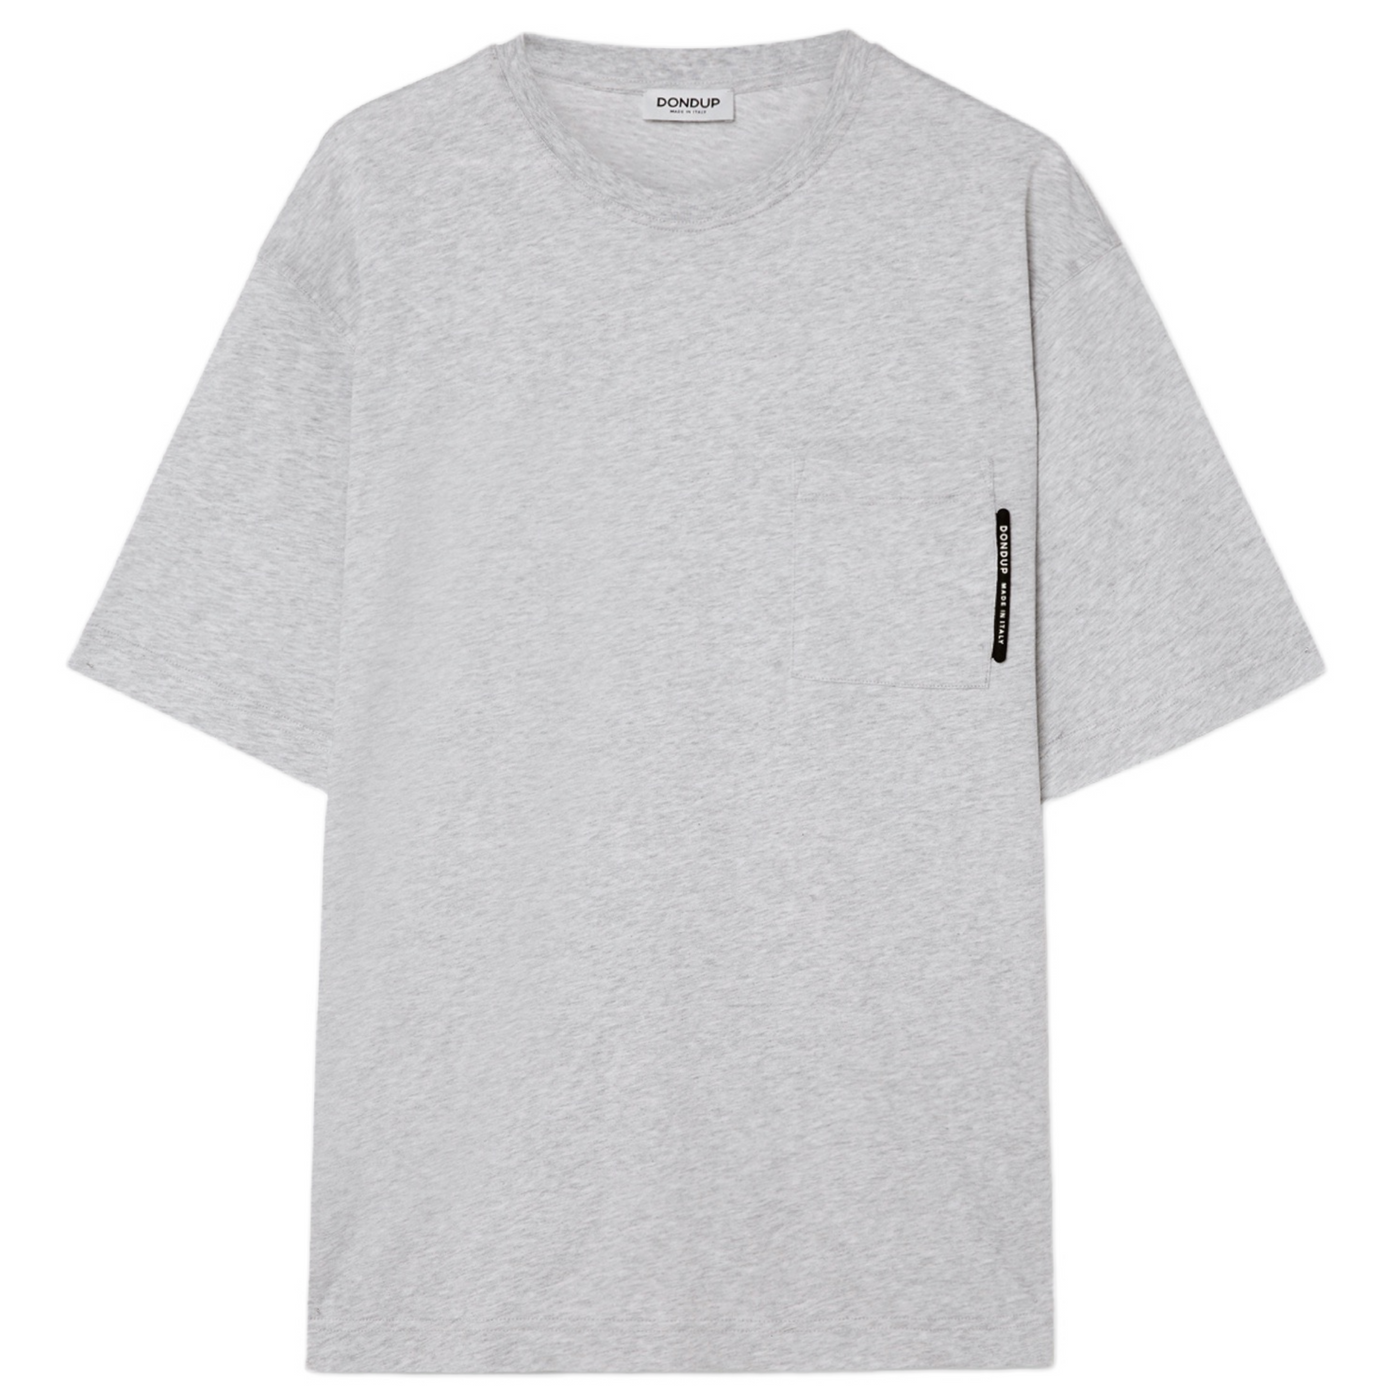 Dondup T-Shirt Light Grey